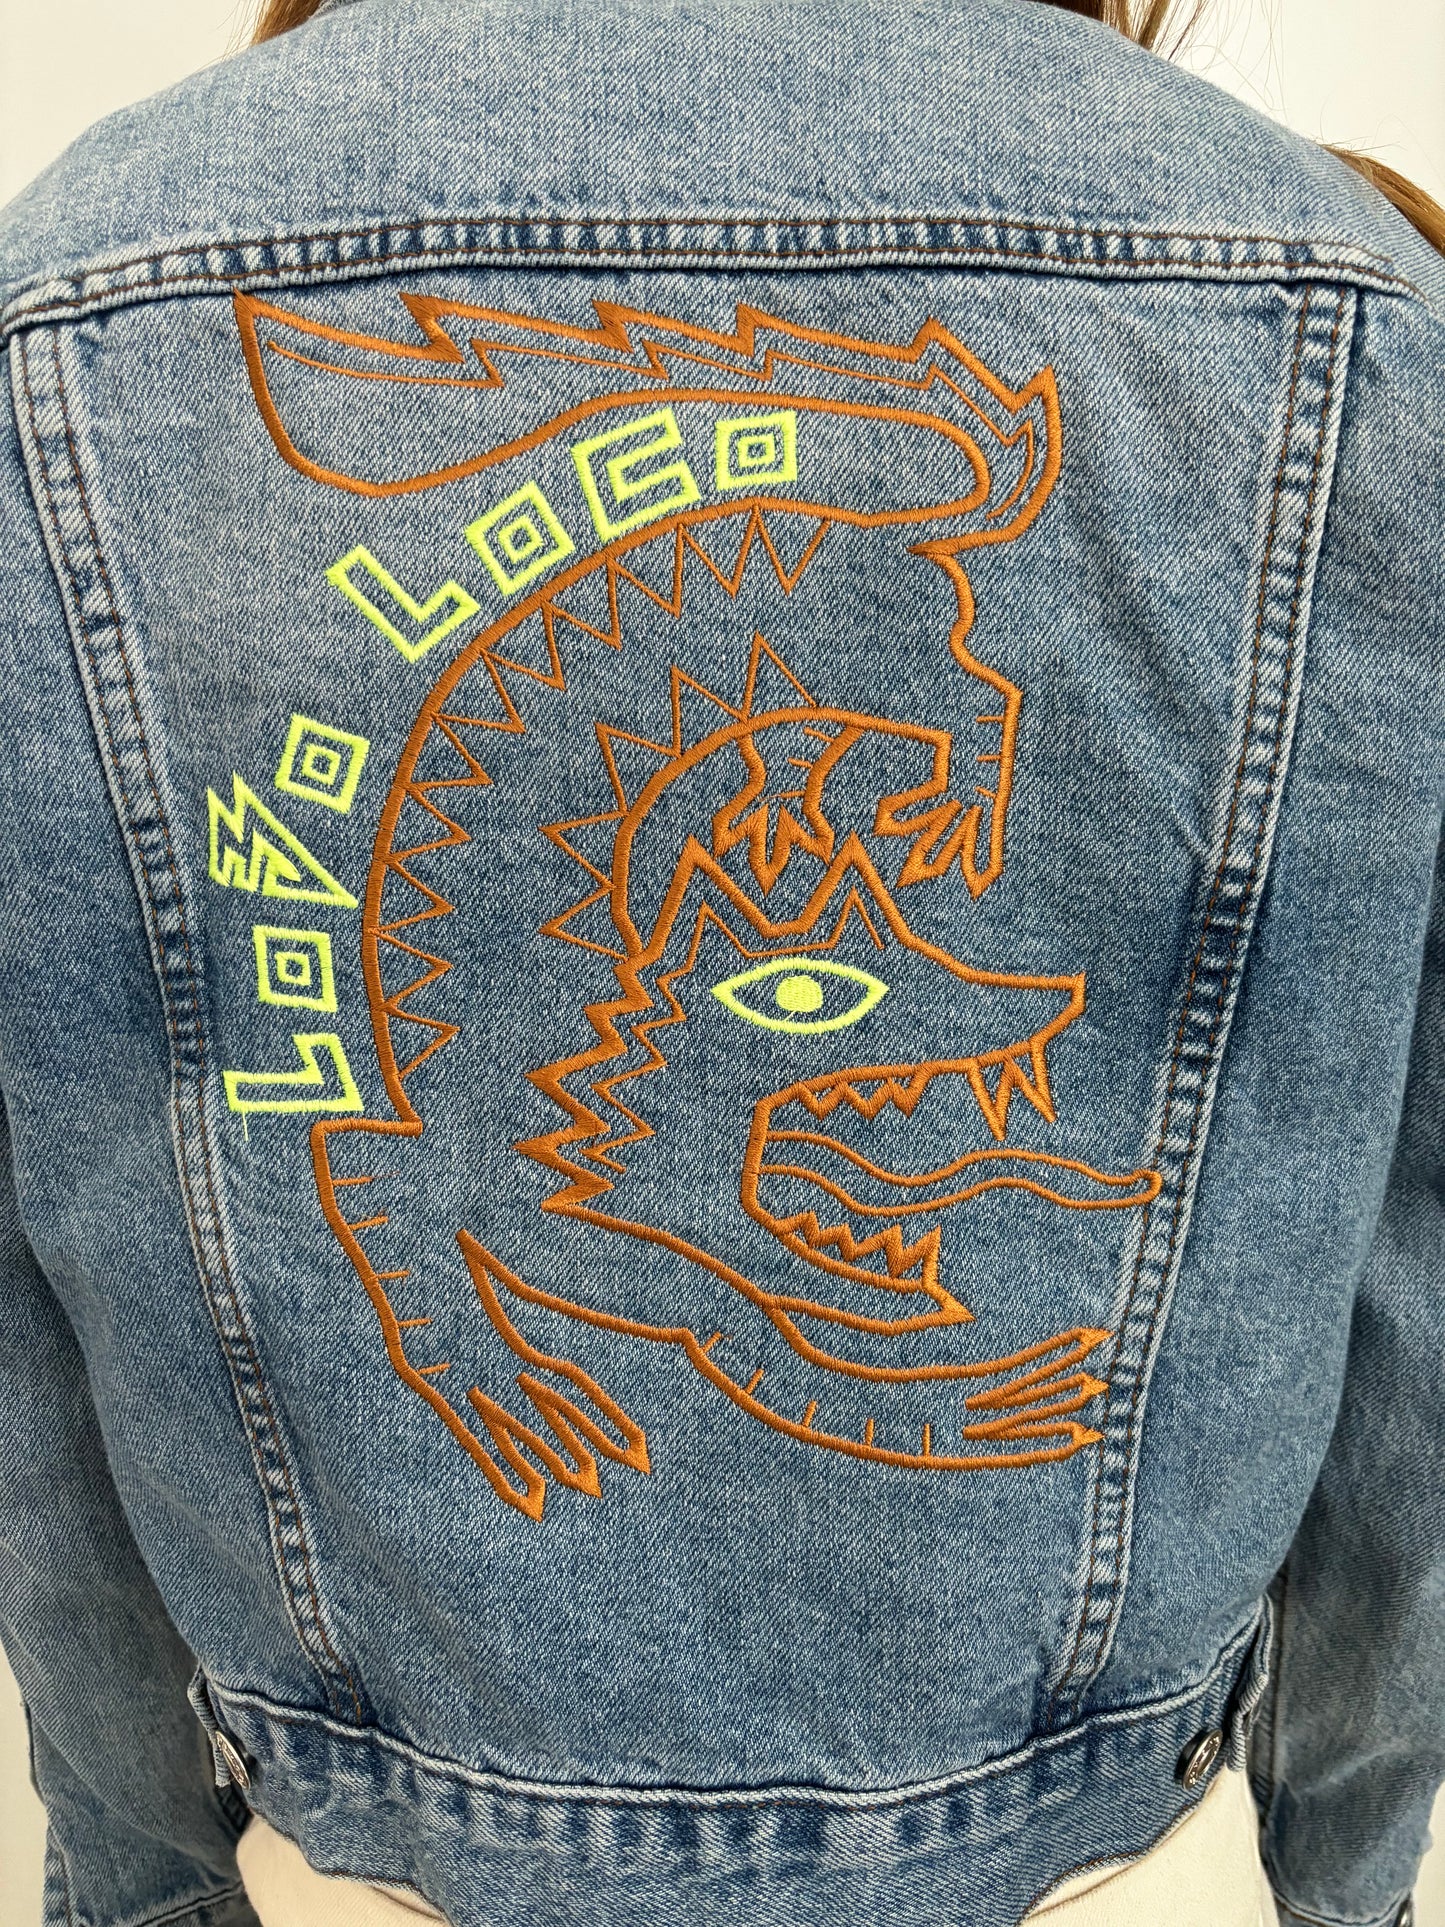 Loco Lobo Embroidered Denim Jacket